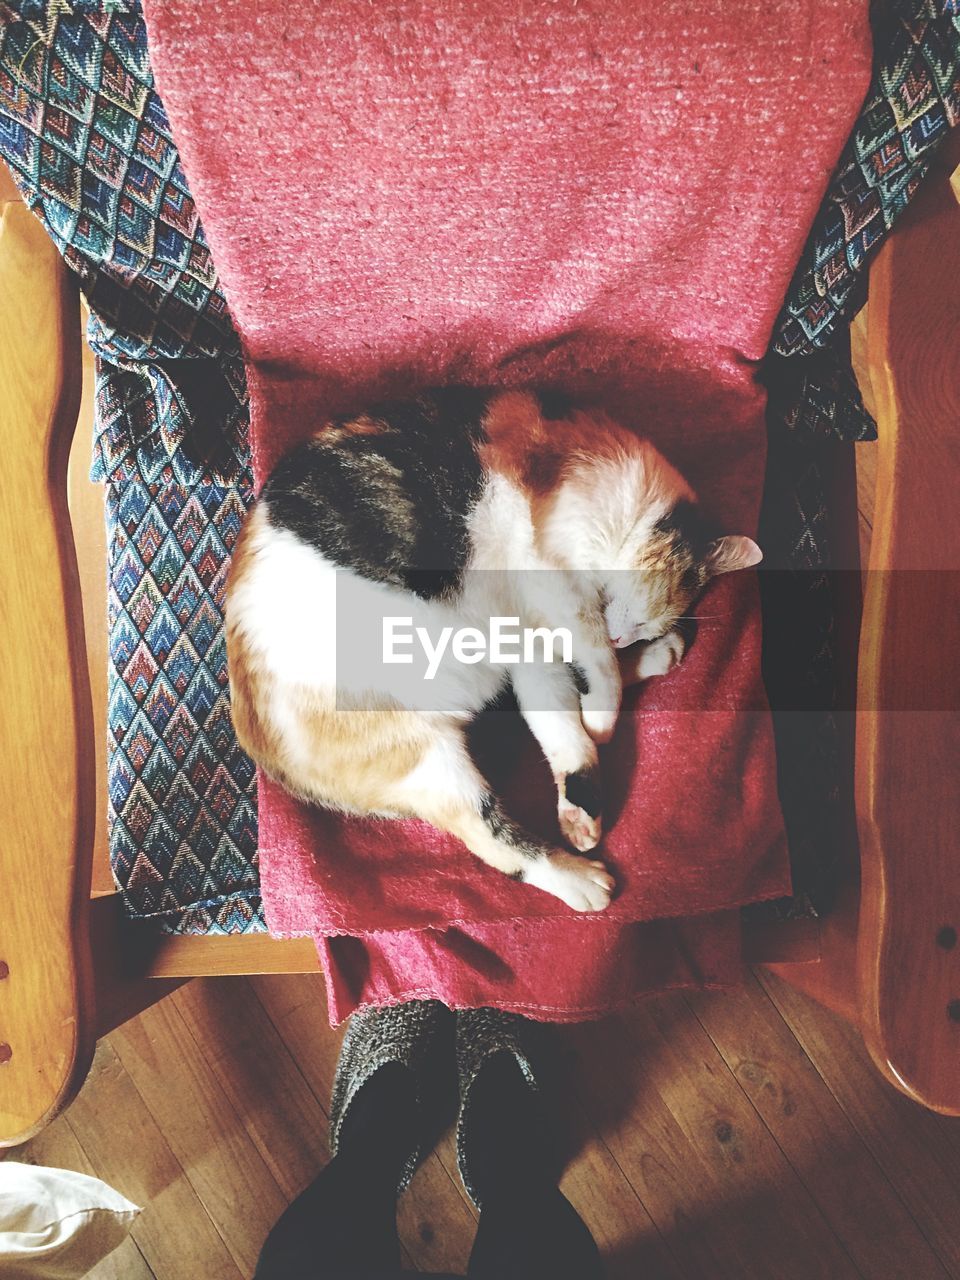 Cat sleeping on chair